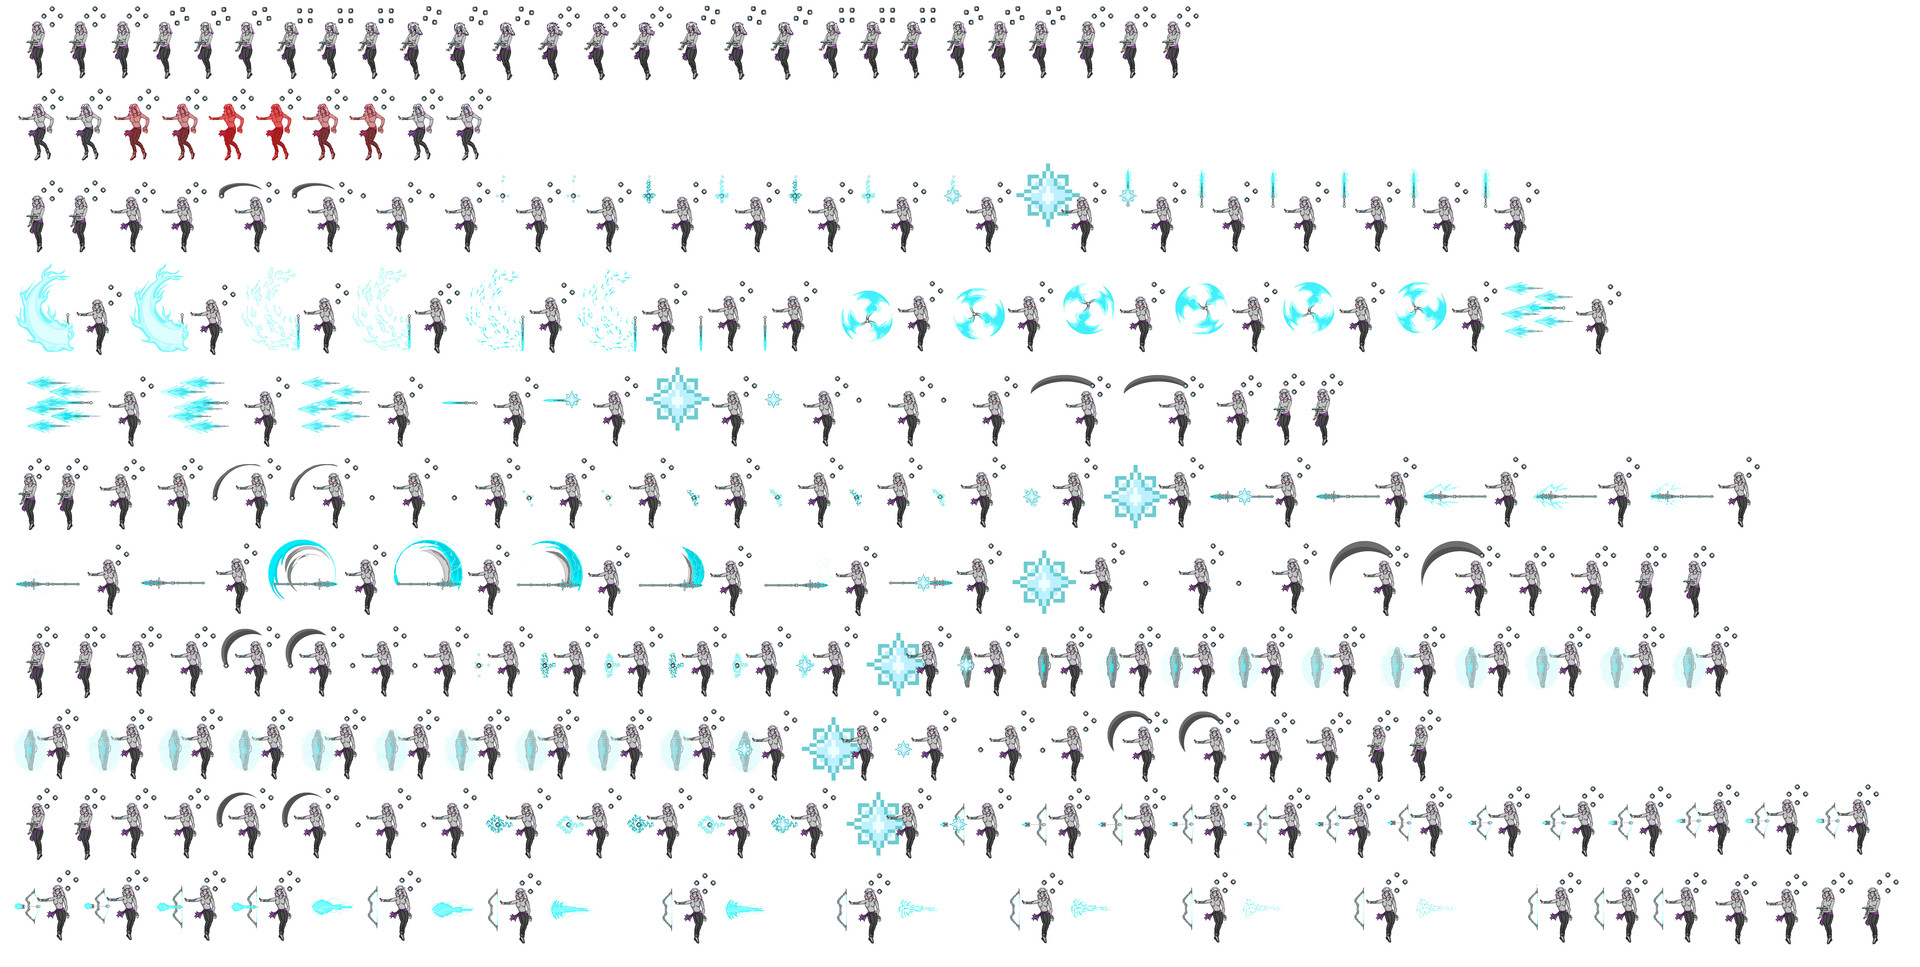 Featured image of post Anime Sprite Sheet animedrawing anime sprite sheet character spritesheet art poses design reference dance poses anime drawing poses chart sheet instaart character characterdrawing animecharakter